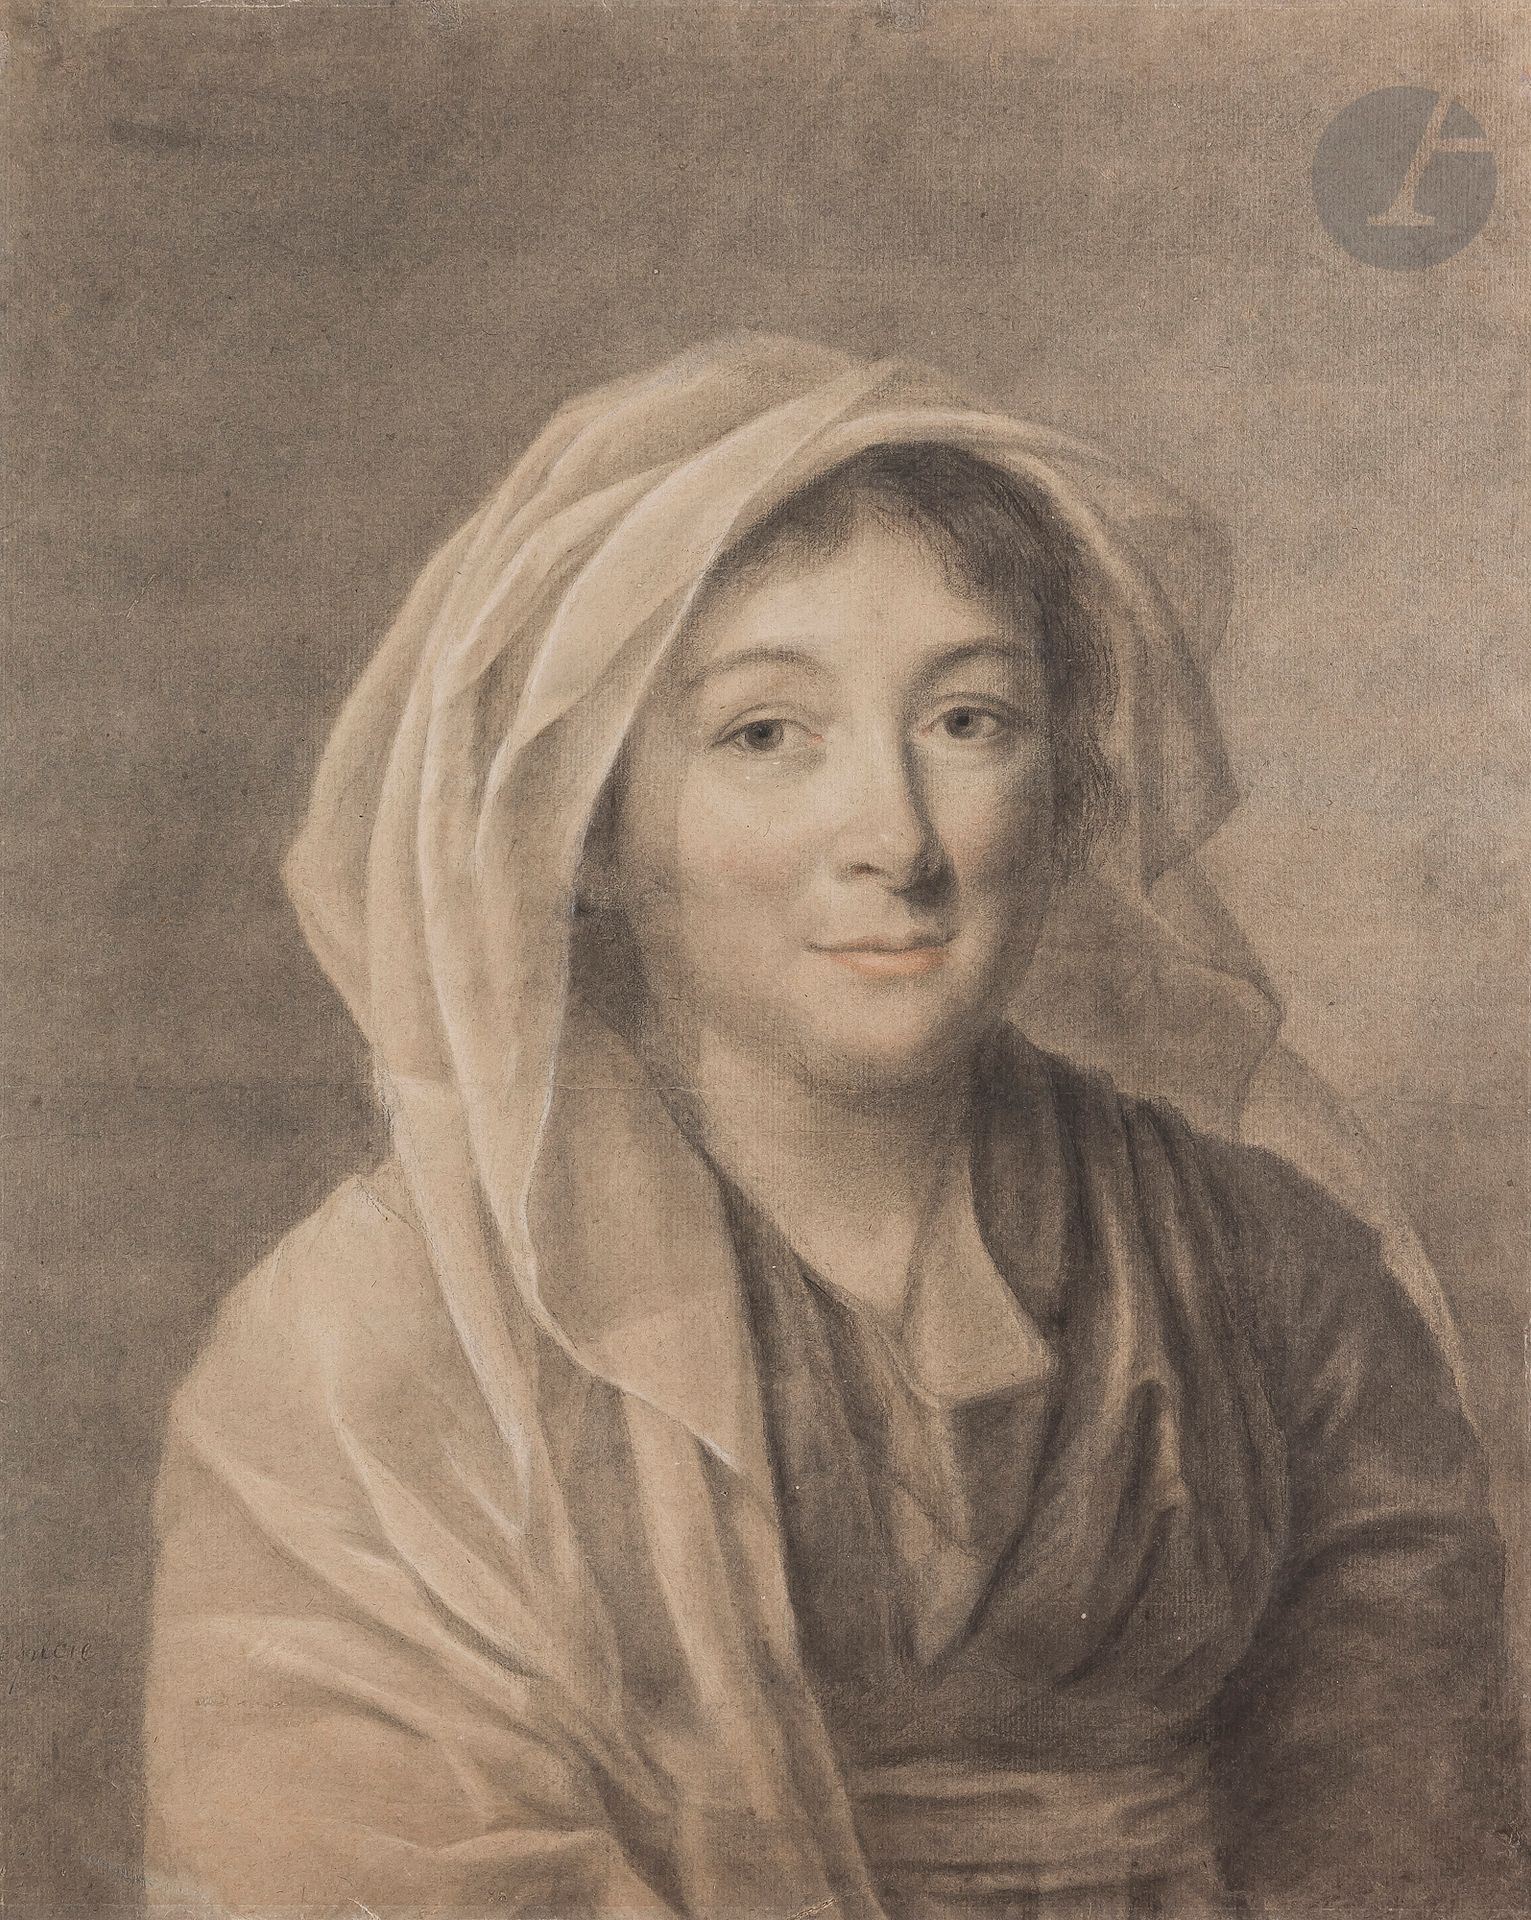 Null Attributed to Nicolas-Bernard LEPICIE (Paris 1735 - 1784)
Portrait of a wom&hellip;